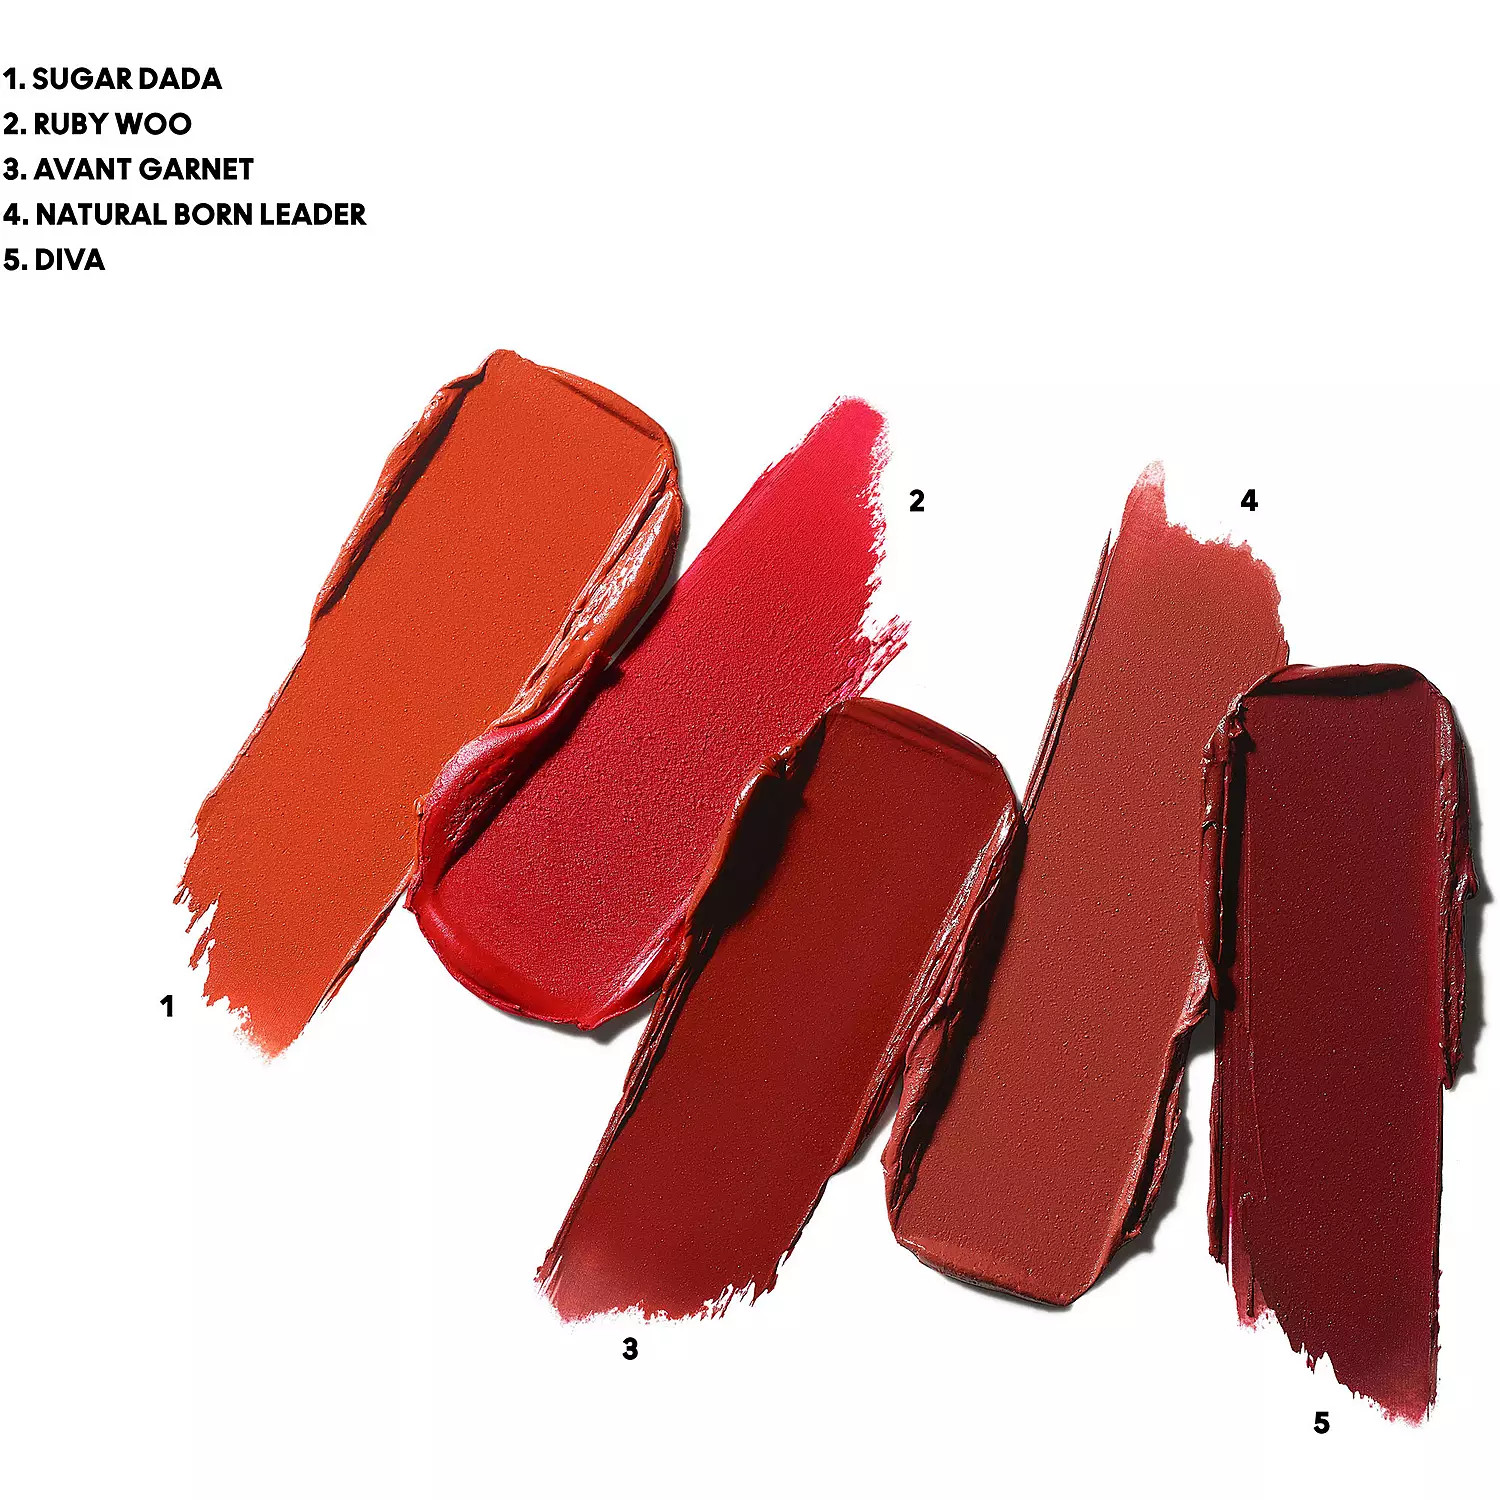 M.A.C 5-pcs Matte Lipstick Set • A Taste Of Matte Lipstick, 5 cây limited kèm clutch phiên bản giới hạn 2022